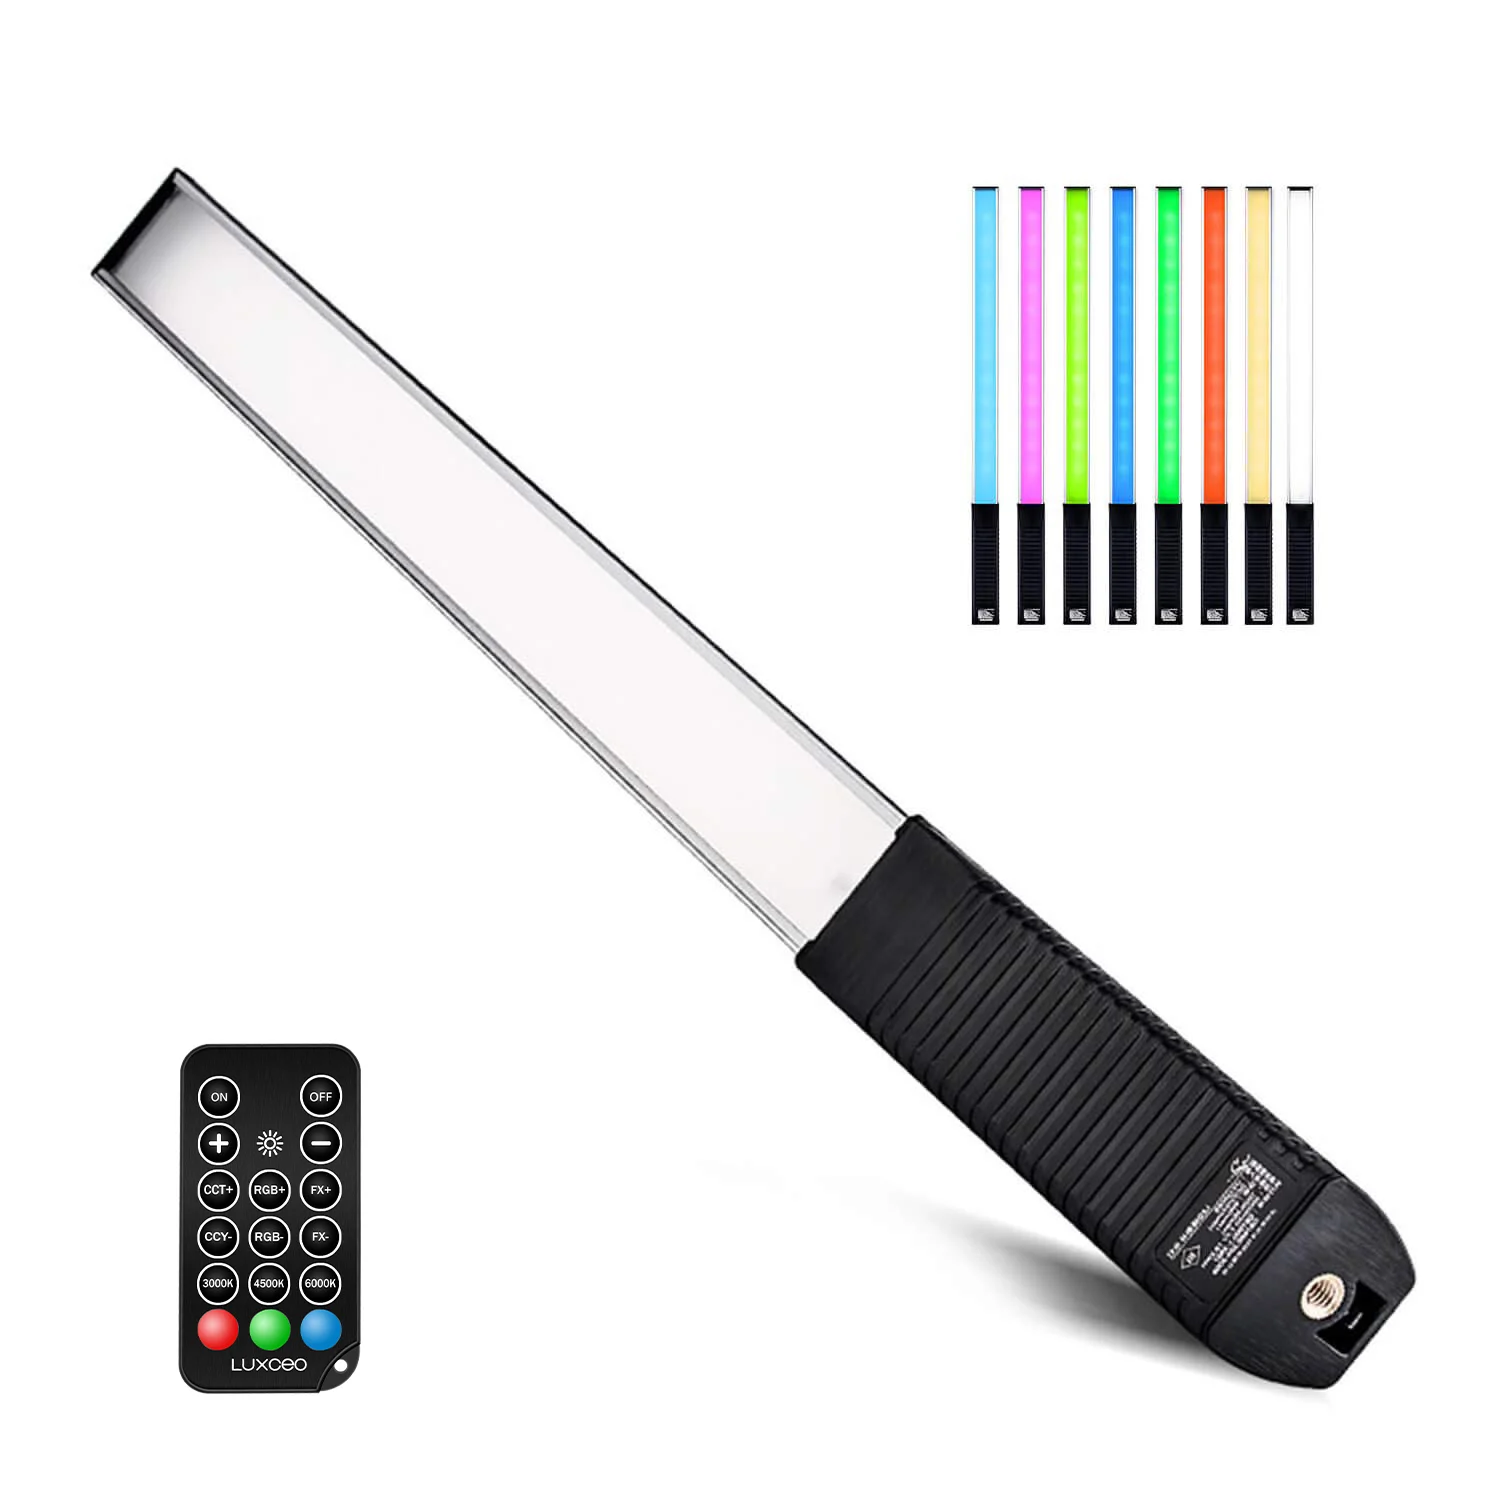 LUXCEO Q508A LED RGB Video Light Baton telecomando 3000K-6000K 36 colori Studio Photo Lighting Bar per Youtube TikTok Vlog